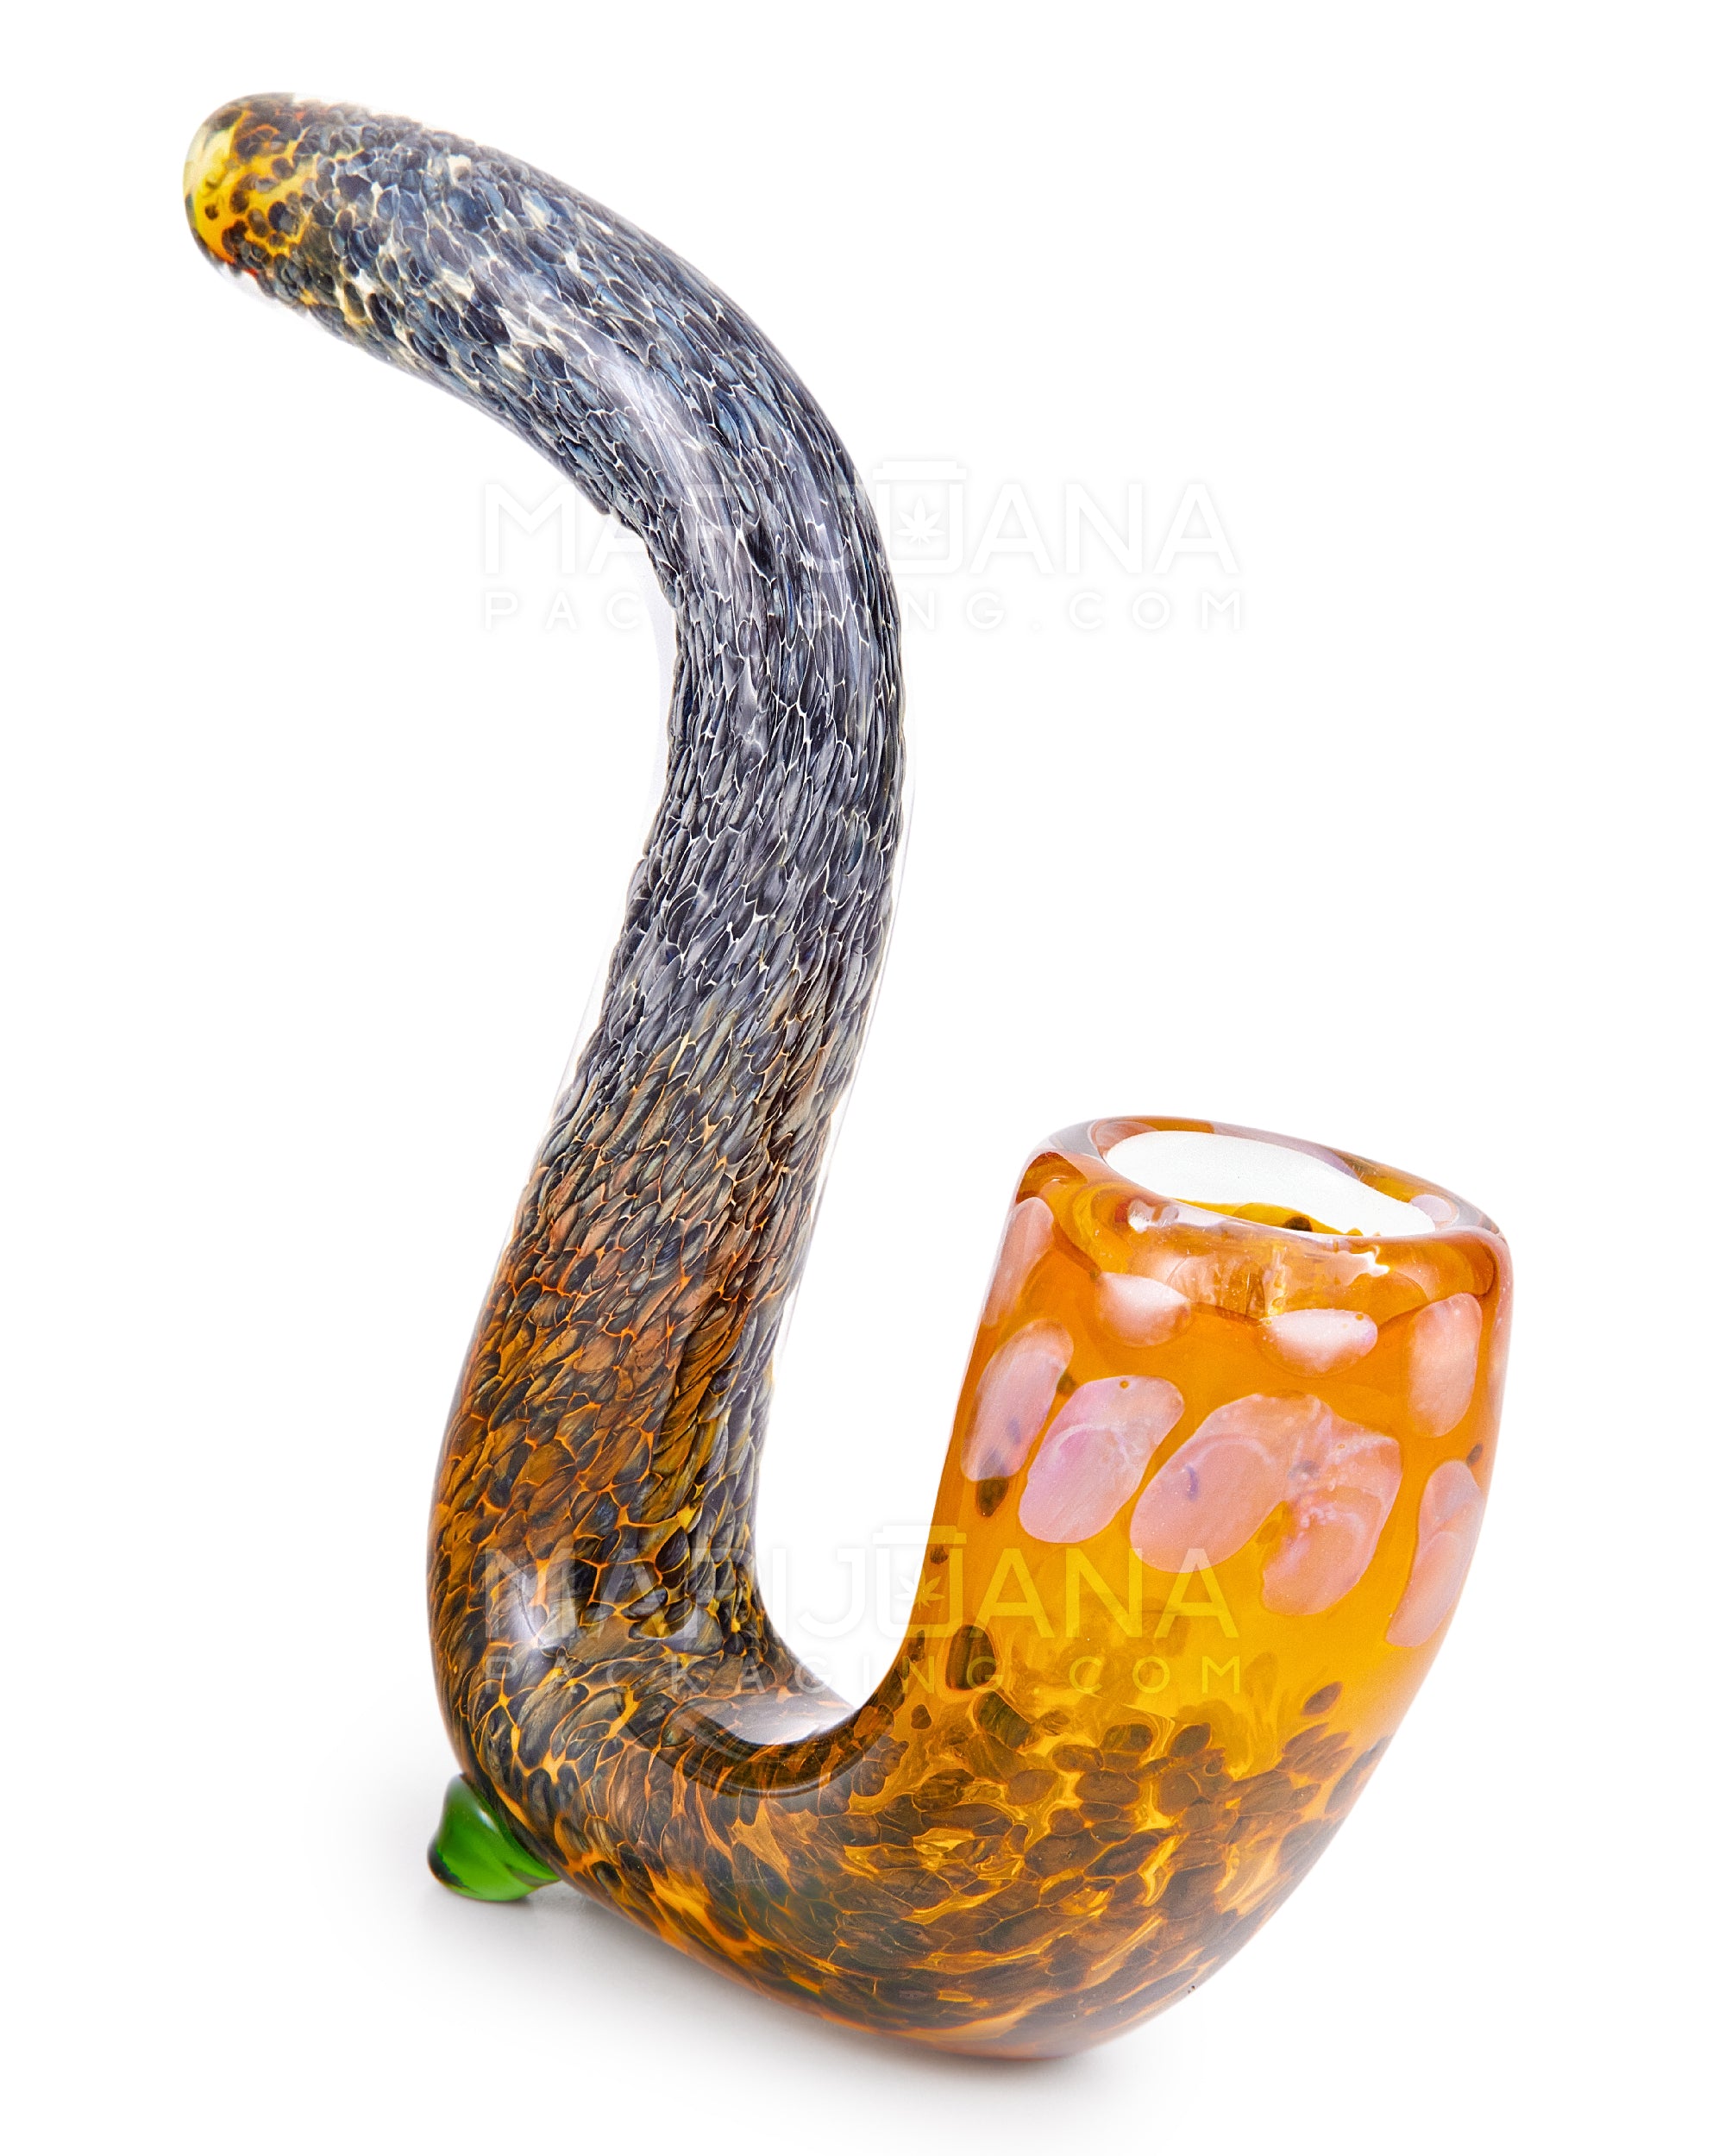 Frit & Fumed Sherlock Hand Pipe w/ Speckles | 5.5in Long - Glass - Assorted - 5